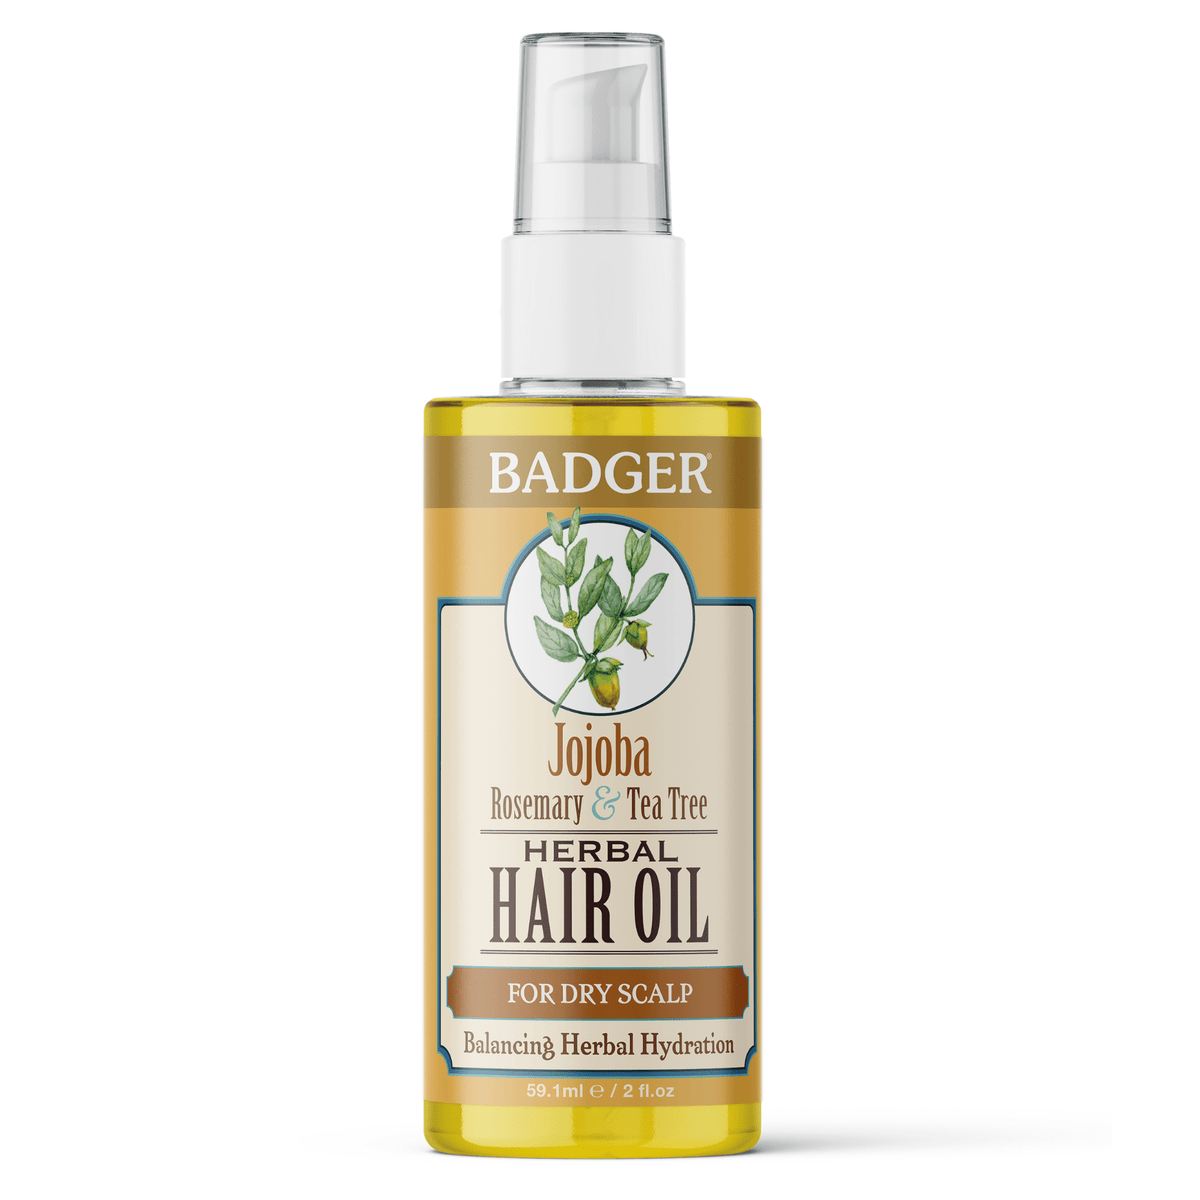 Primary Image of Jojoba Herbal Hair Oil